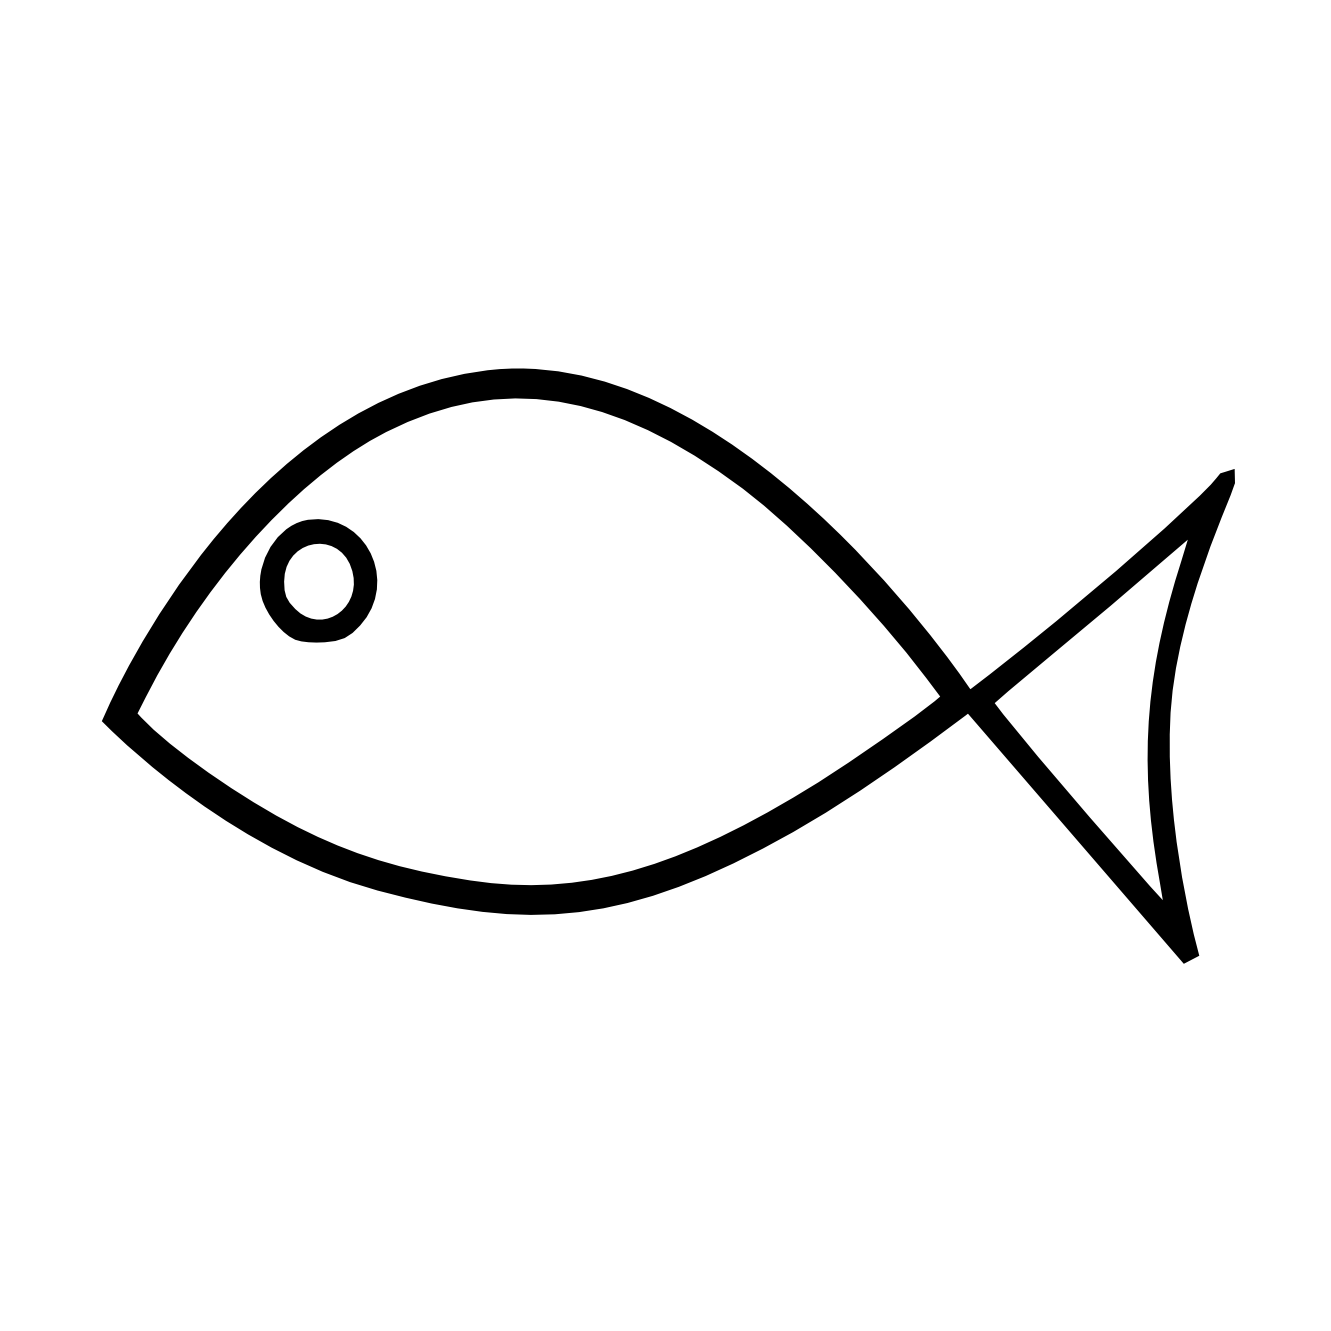 Clip Art A Fish - Clipart library